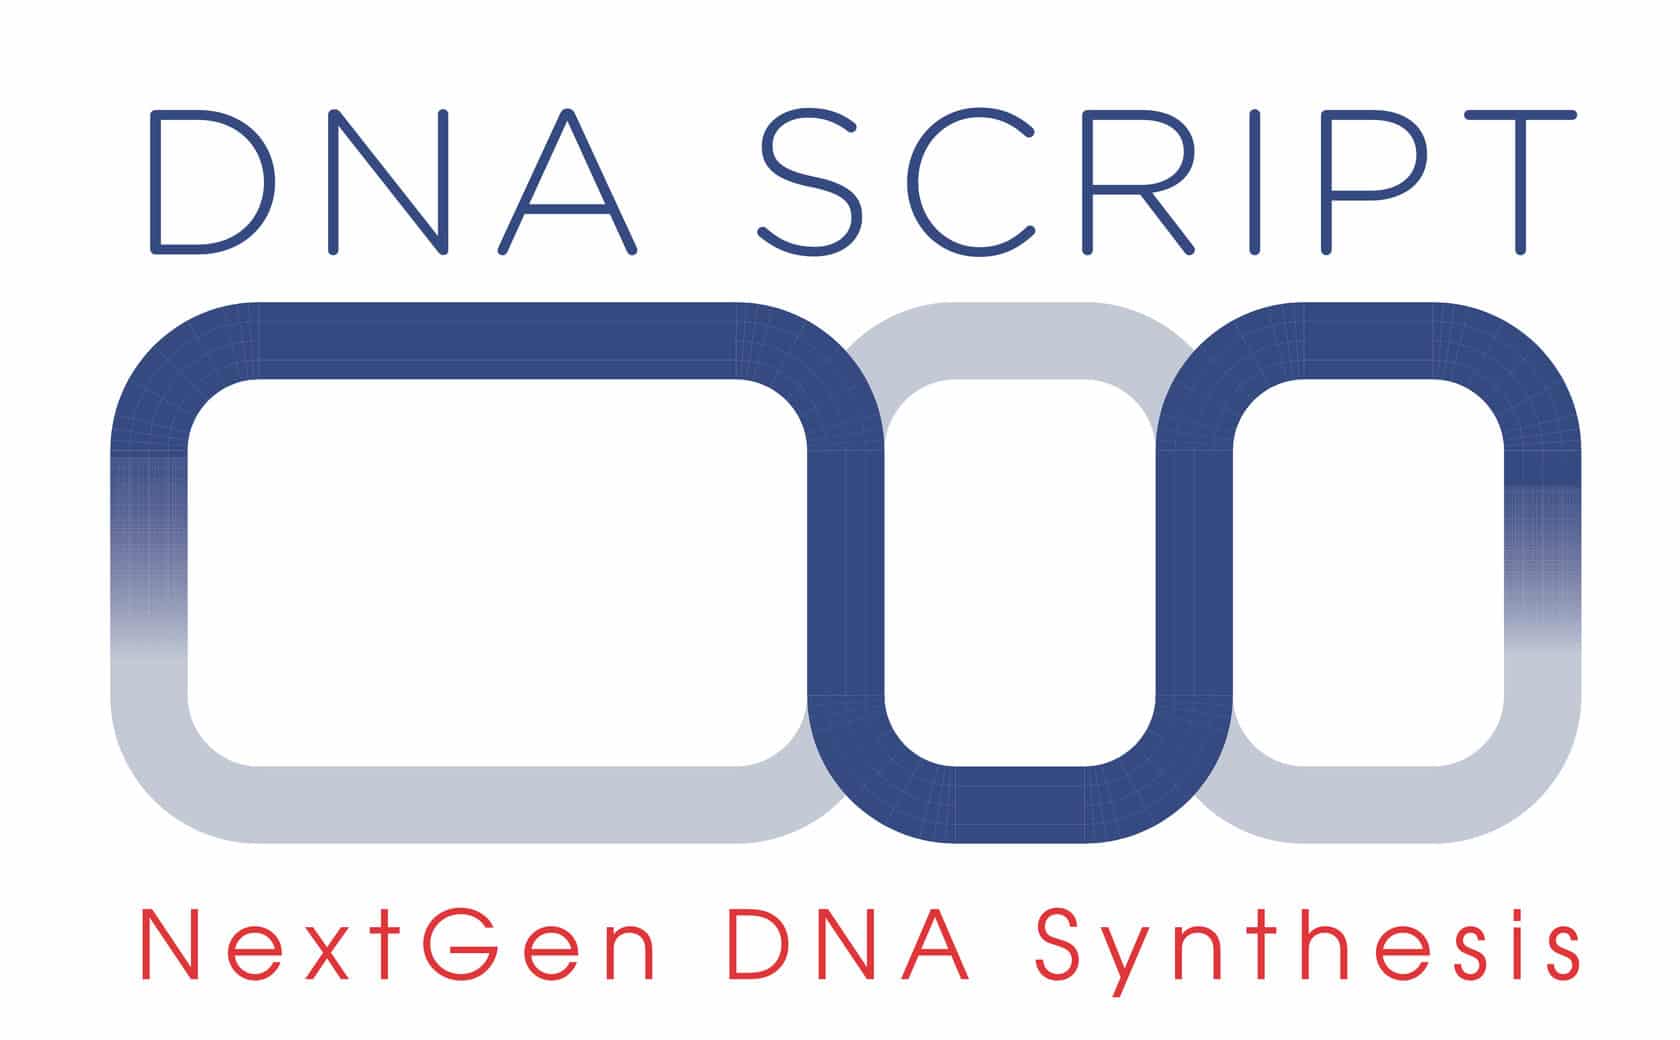 DNA-Script-ART-logo-2019